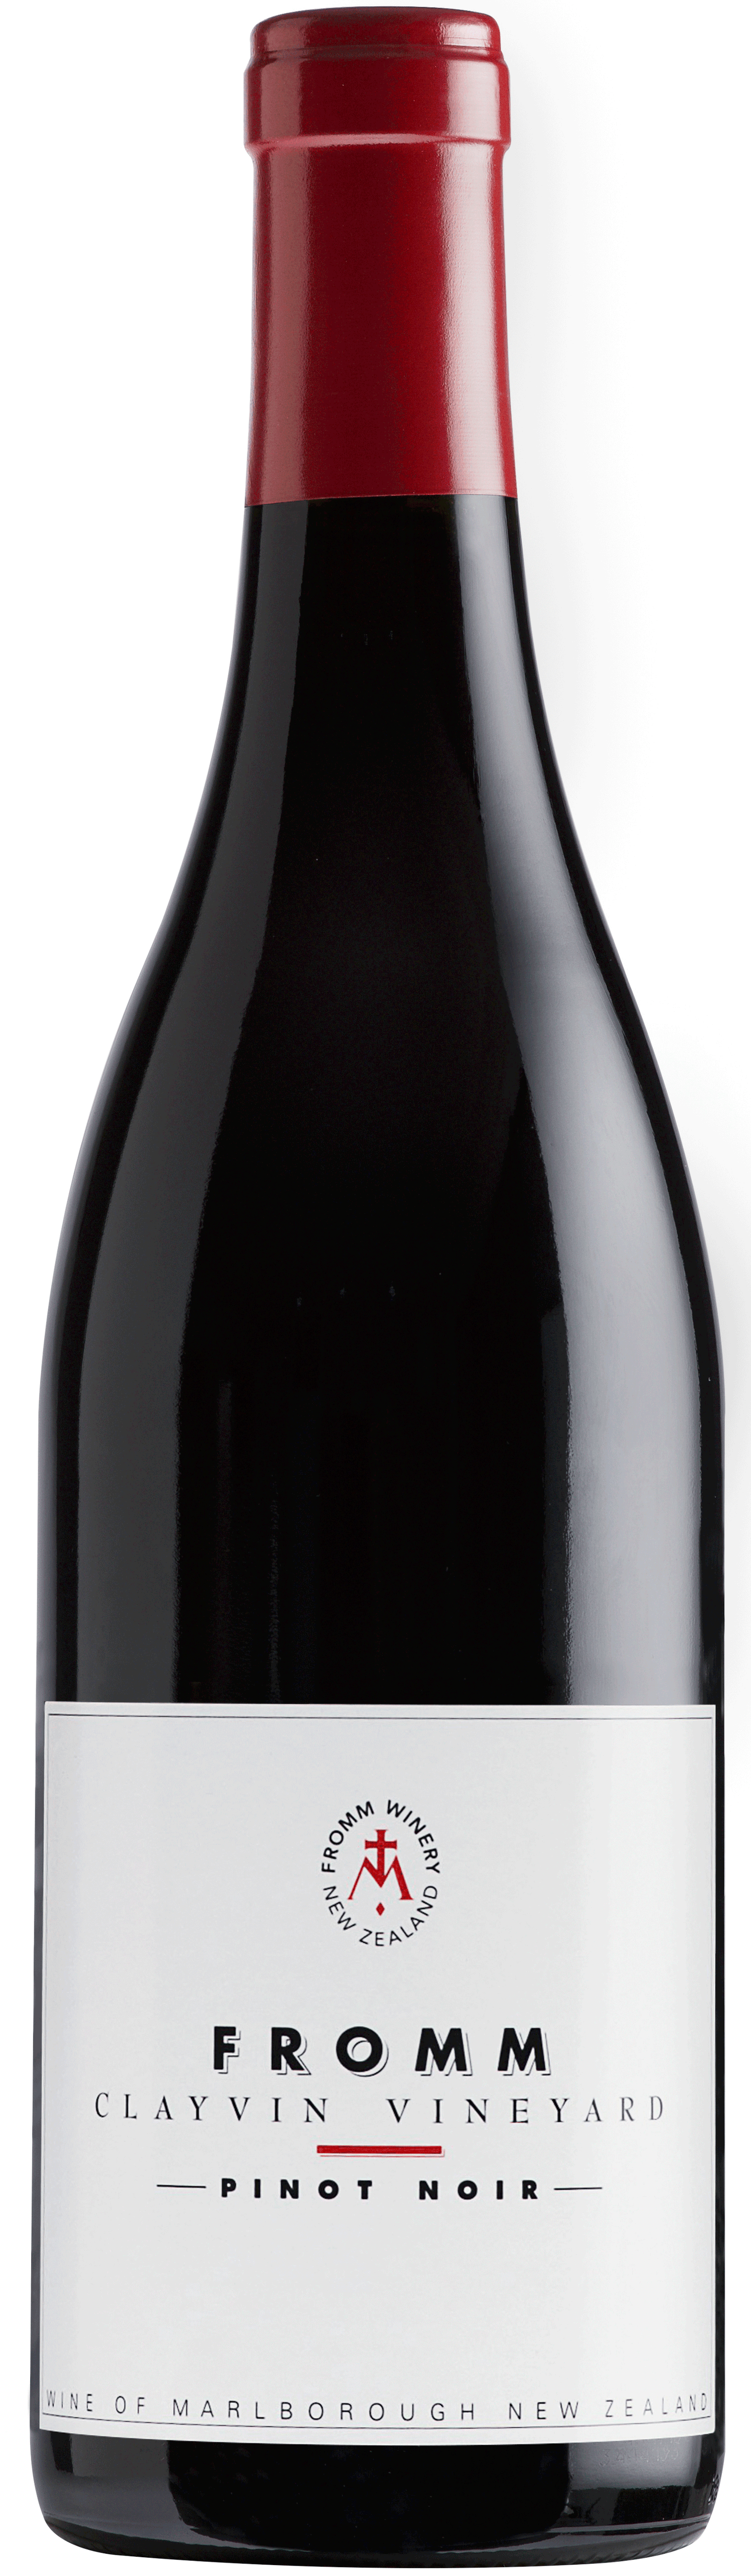 FROMM Pinot Noir Clayvin Vineyard 2016 - Magnum